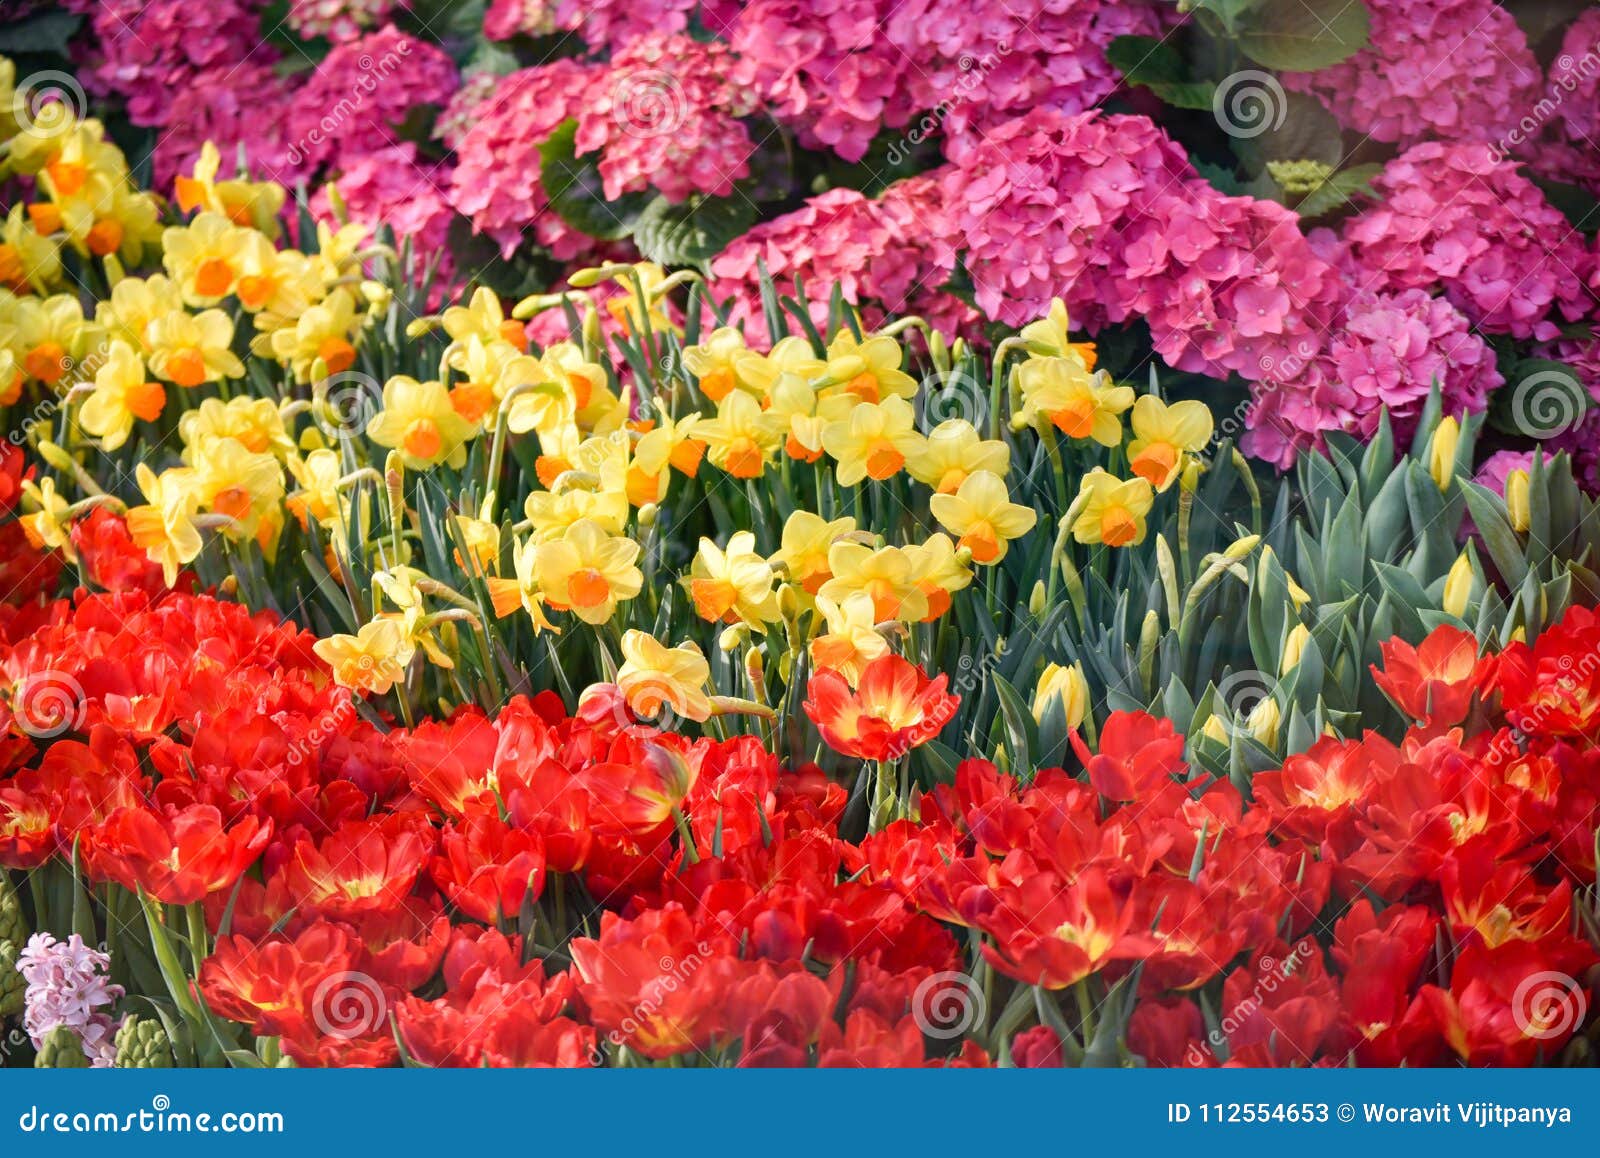 Estate variopinta della fioritura dei tulipani. Bello giardino dei tulipani del giardino floreale di estate variopinta della fioritura